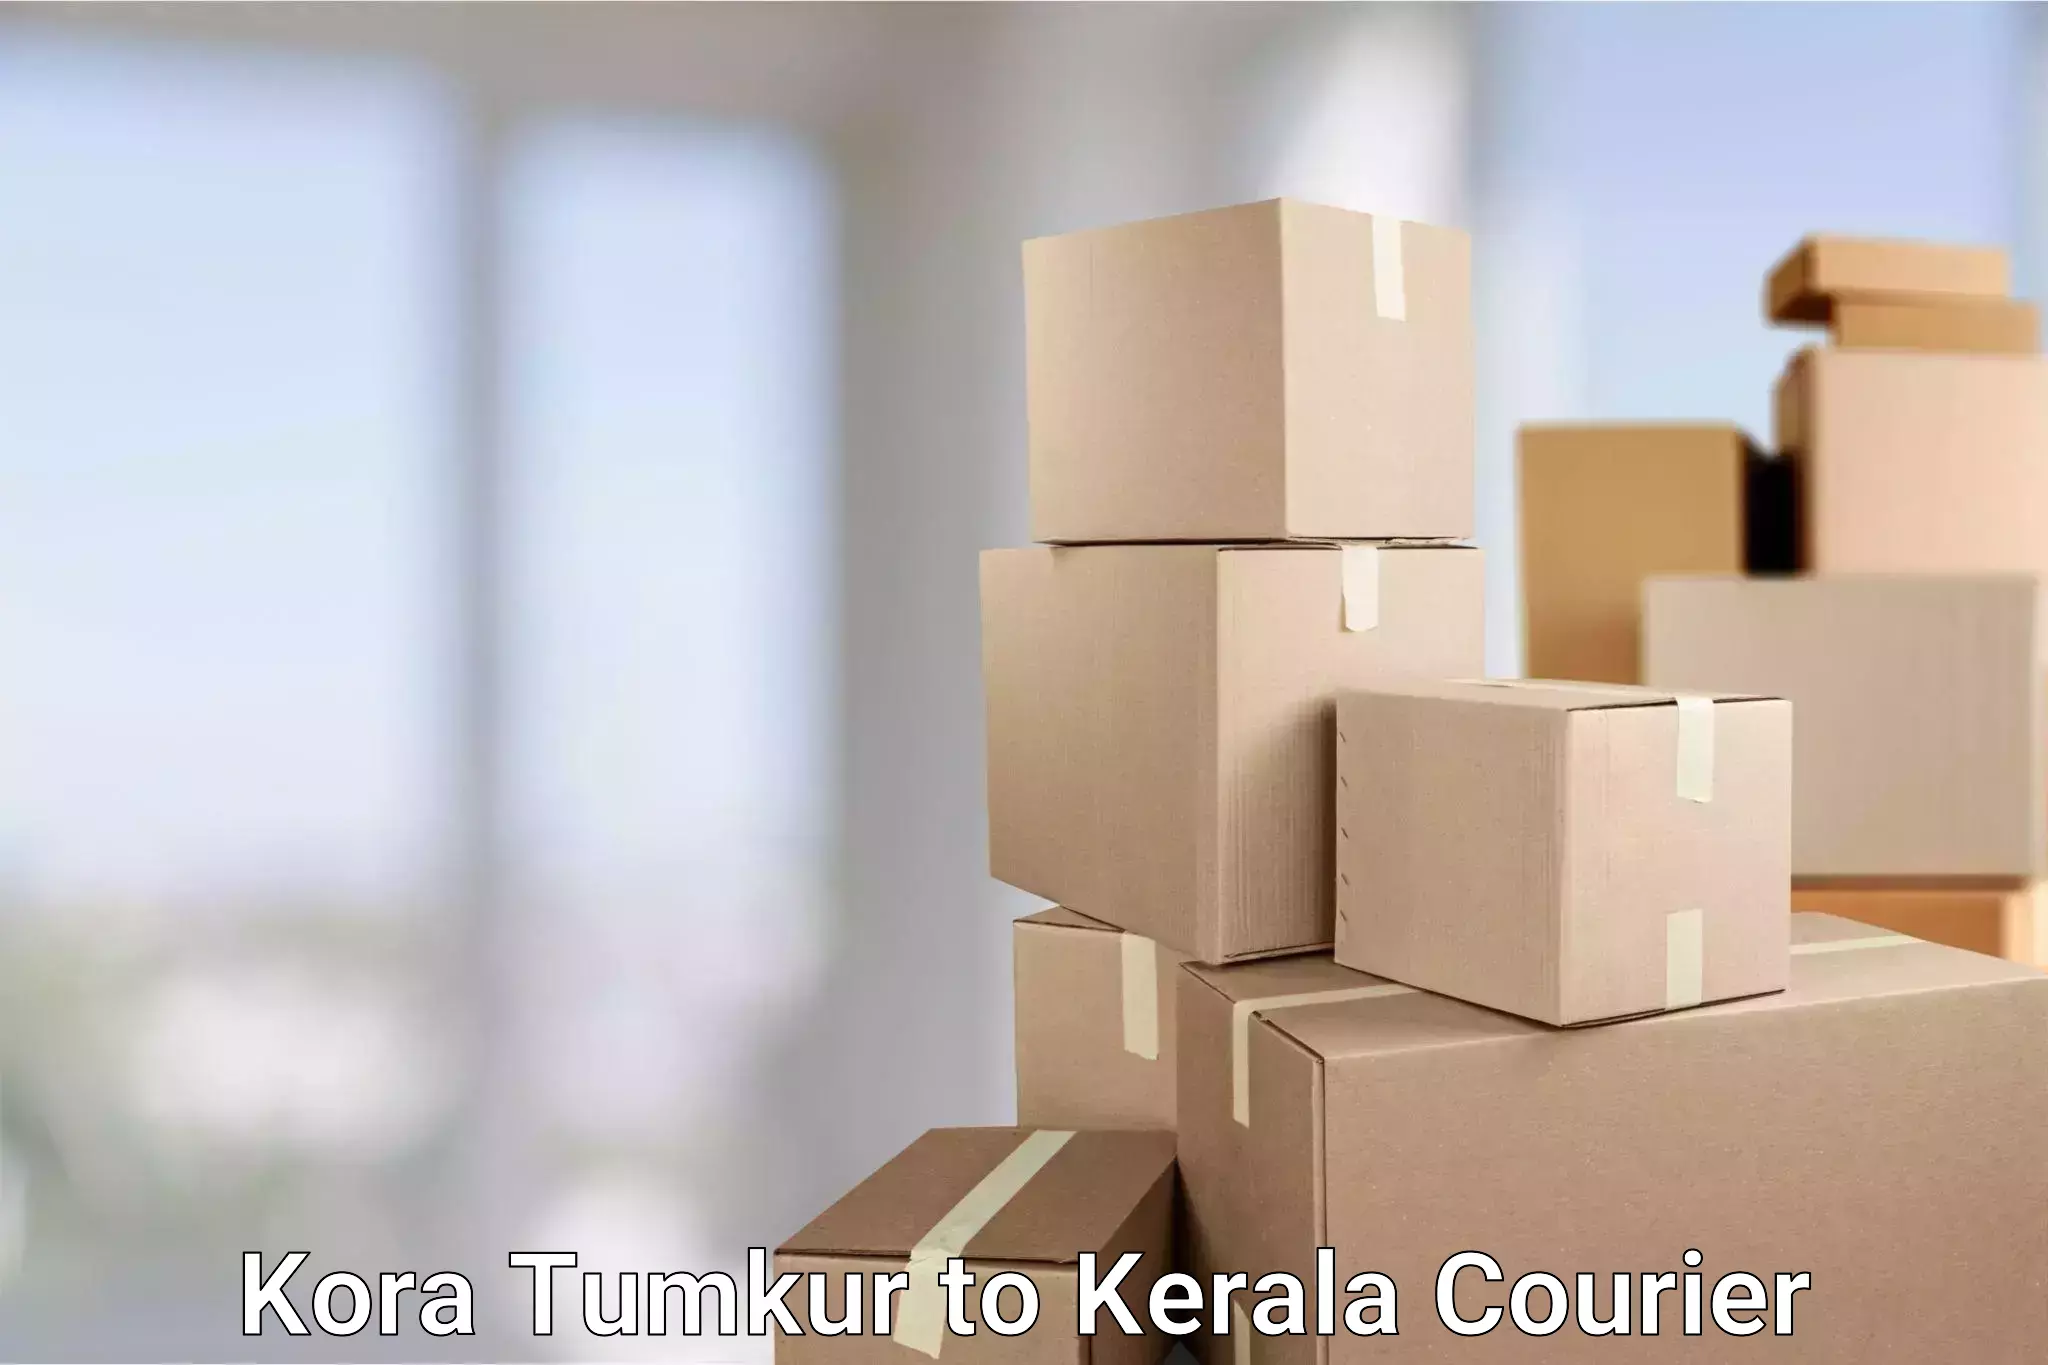 Comprehensive logistics Kora Tumkur to Kerala